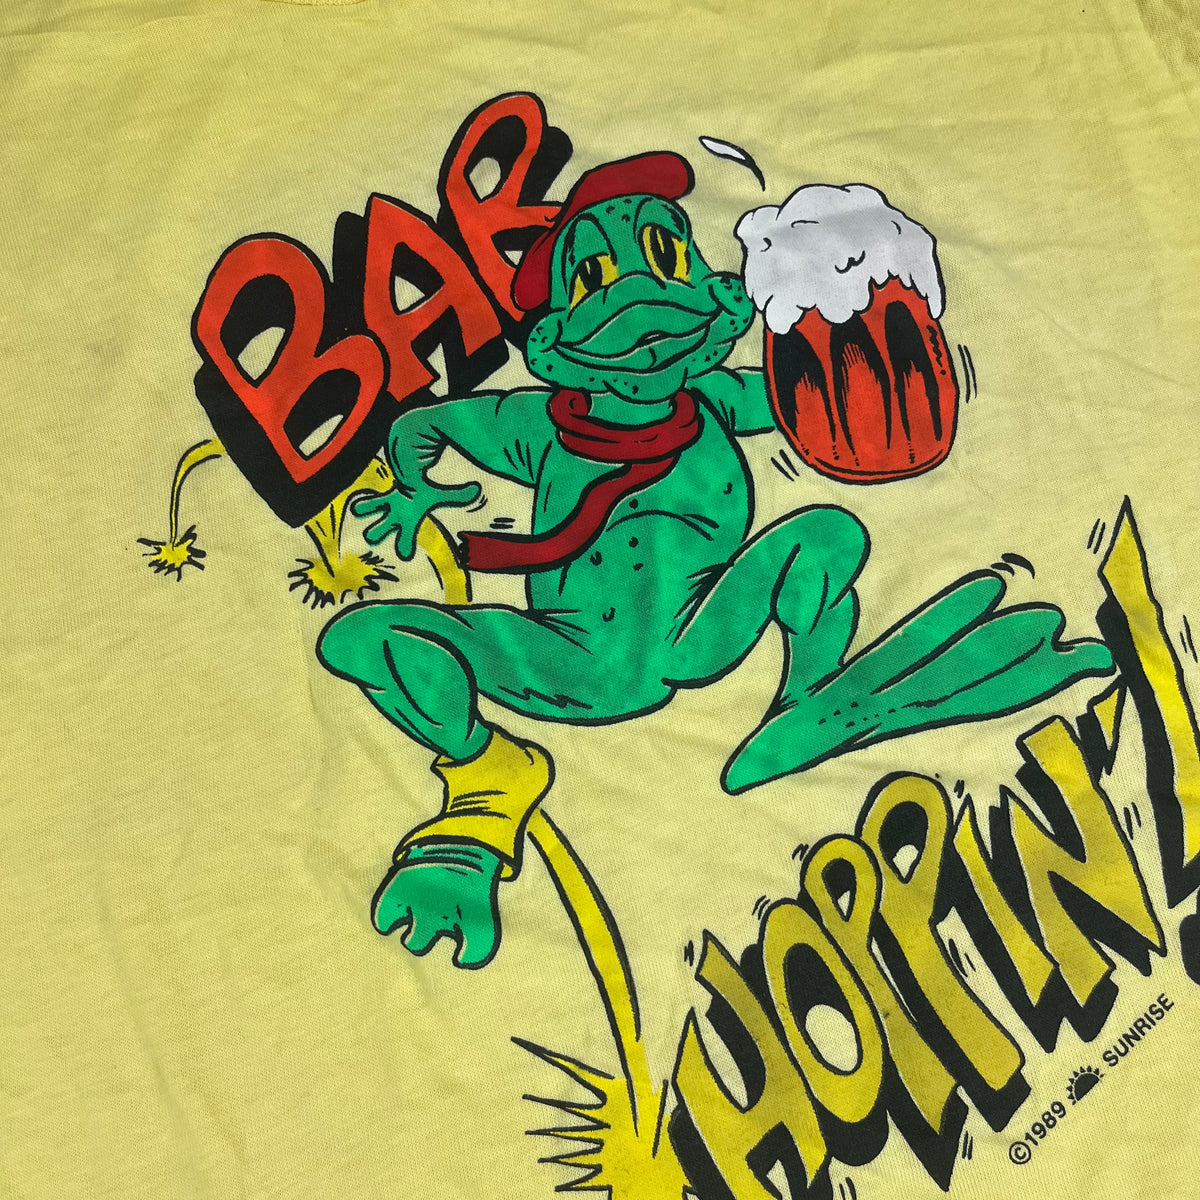 Vintage Frog &quot;Bar Hoppin!&quot; T-Shirt